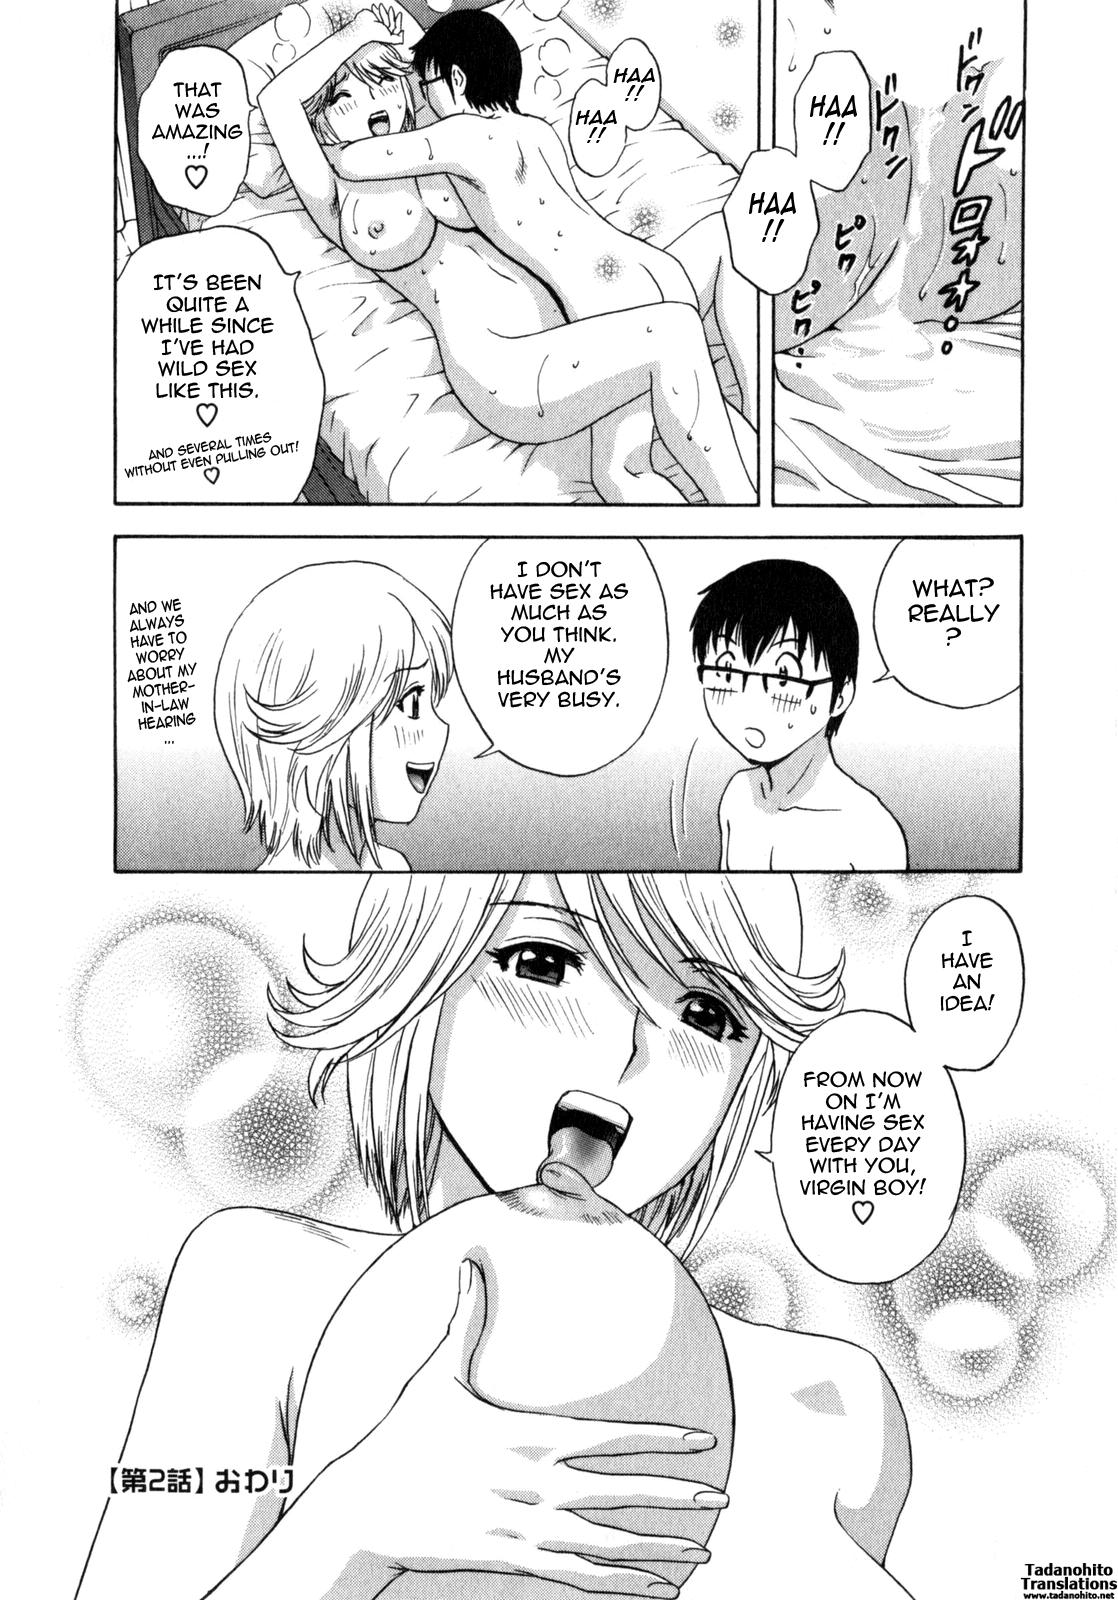 [Hidemaru] Life with Married Women Just Like a Manga 1 - Ch. 1-8 [English] {Tadanohito} 43